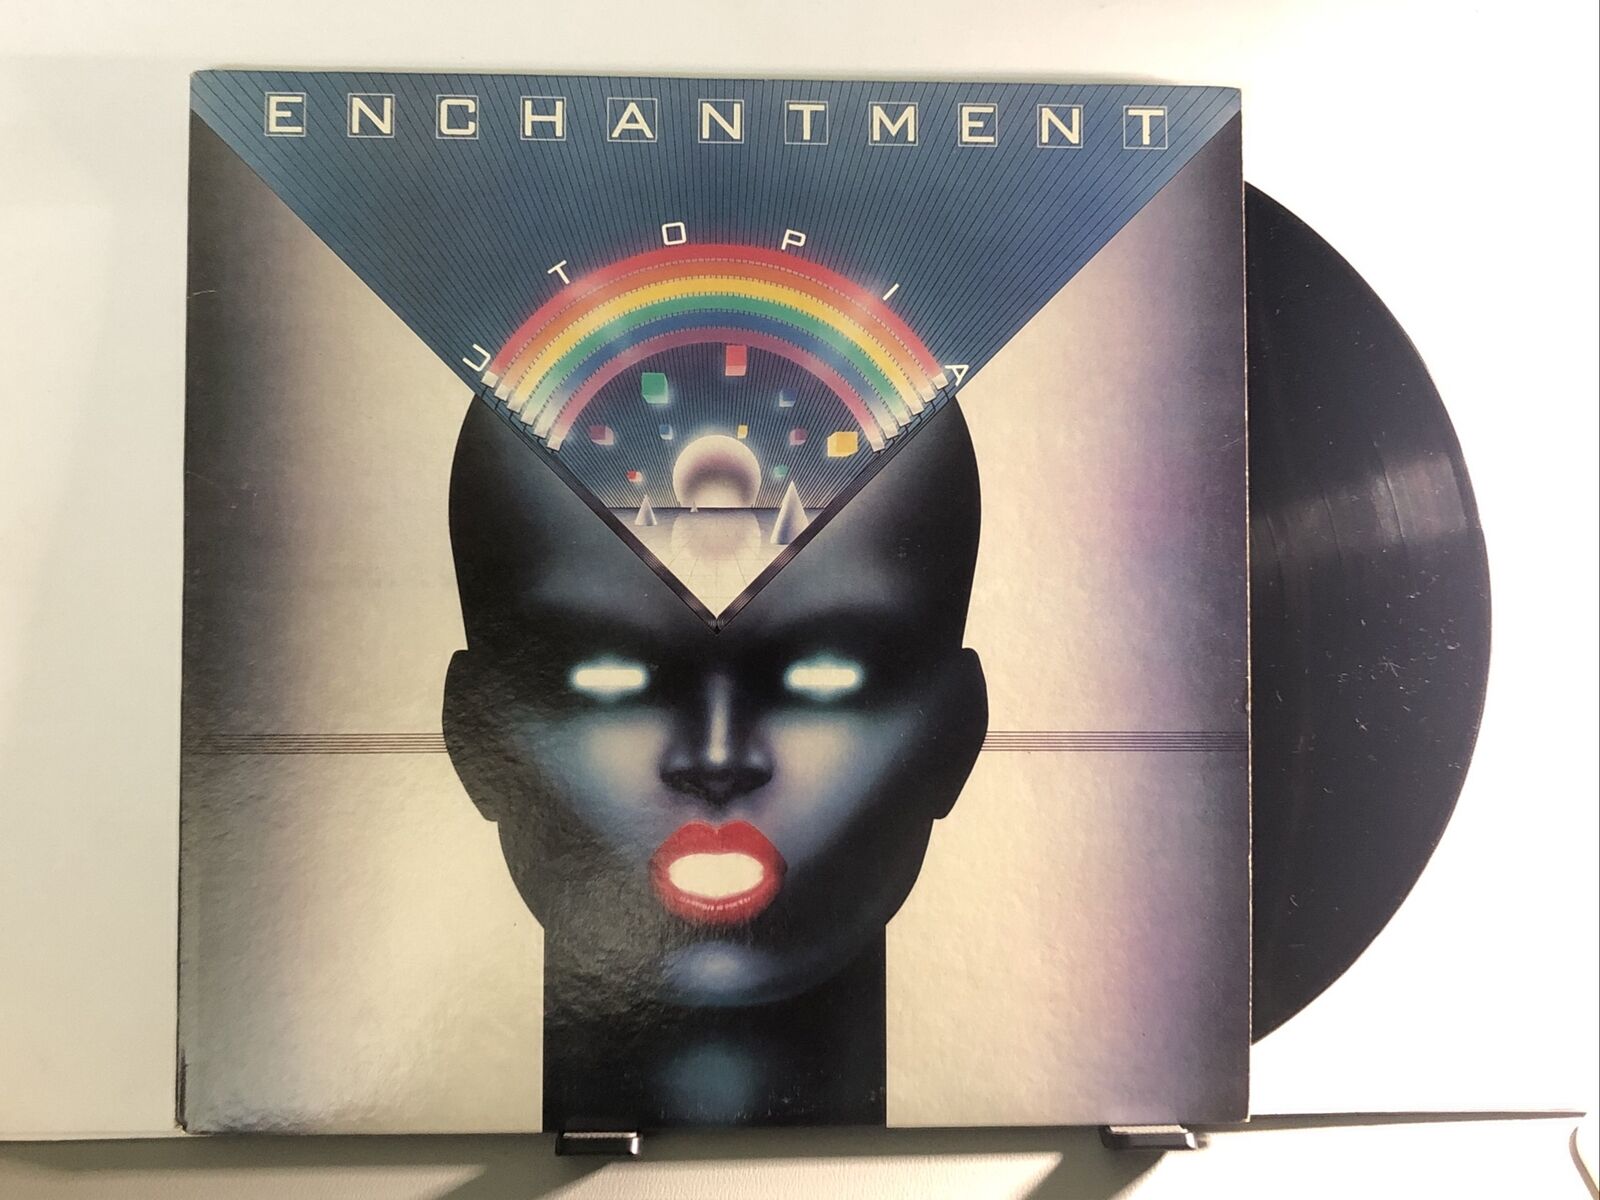 Enchantment Utopia FC 38959 Promo VG+ LP 12in Vinyl Record Album